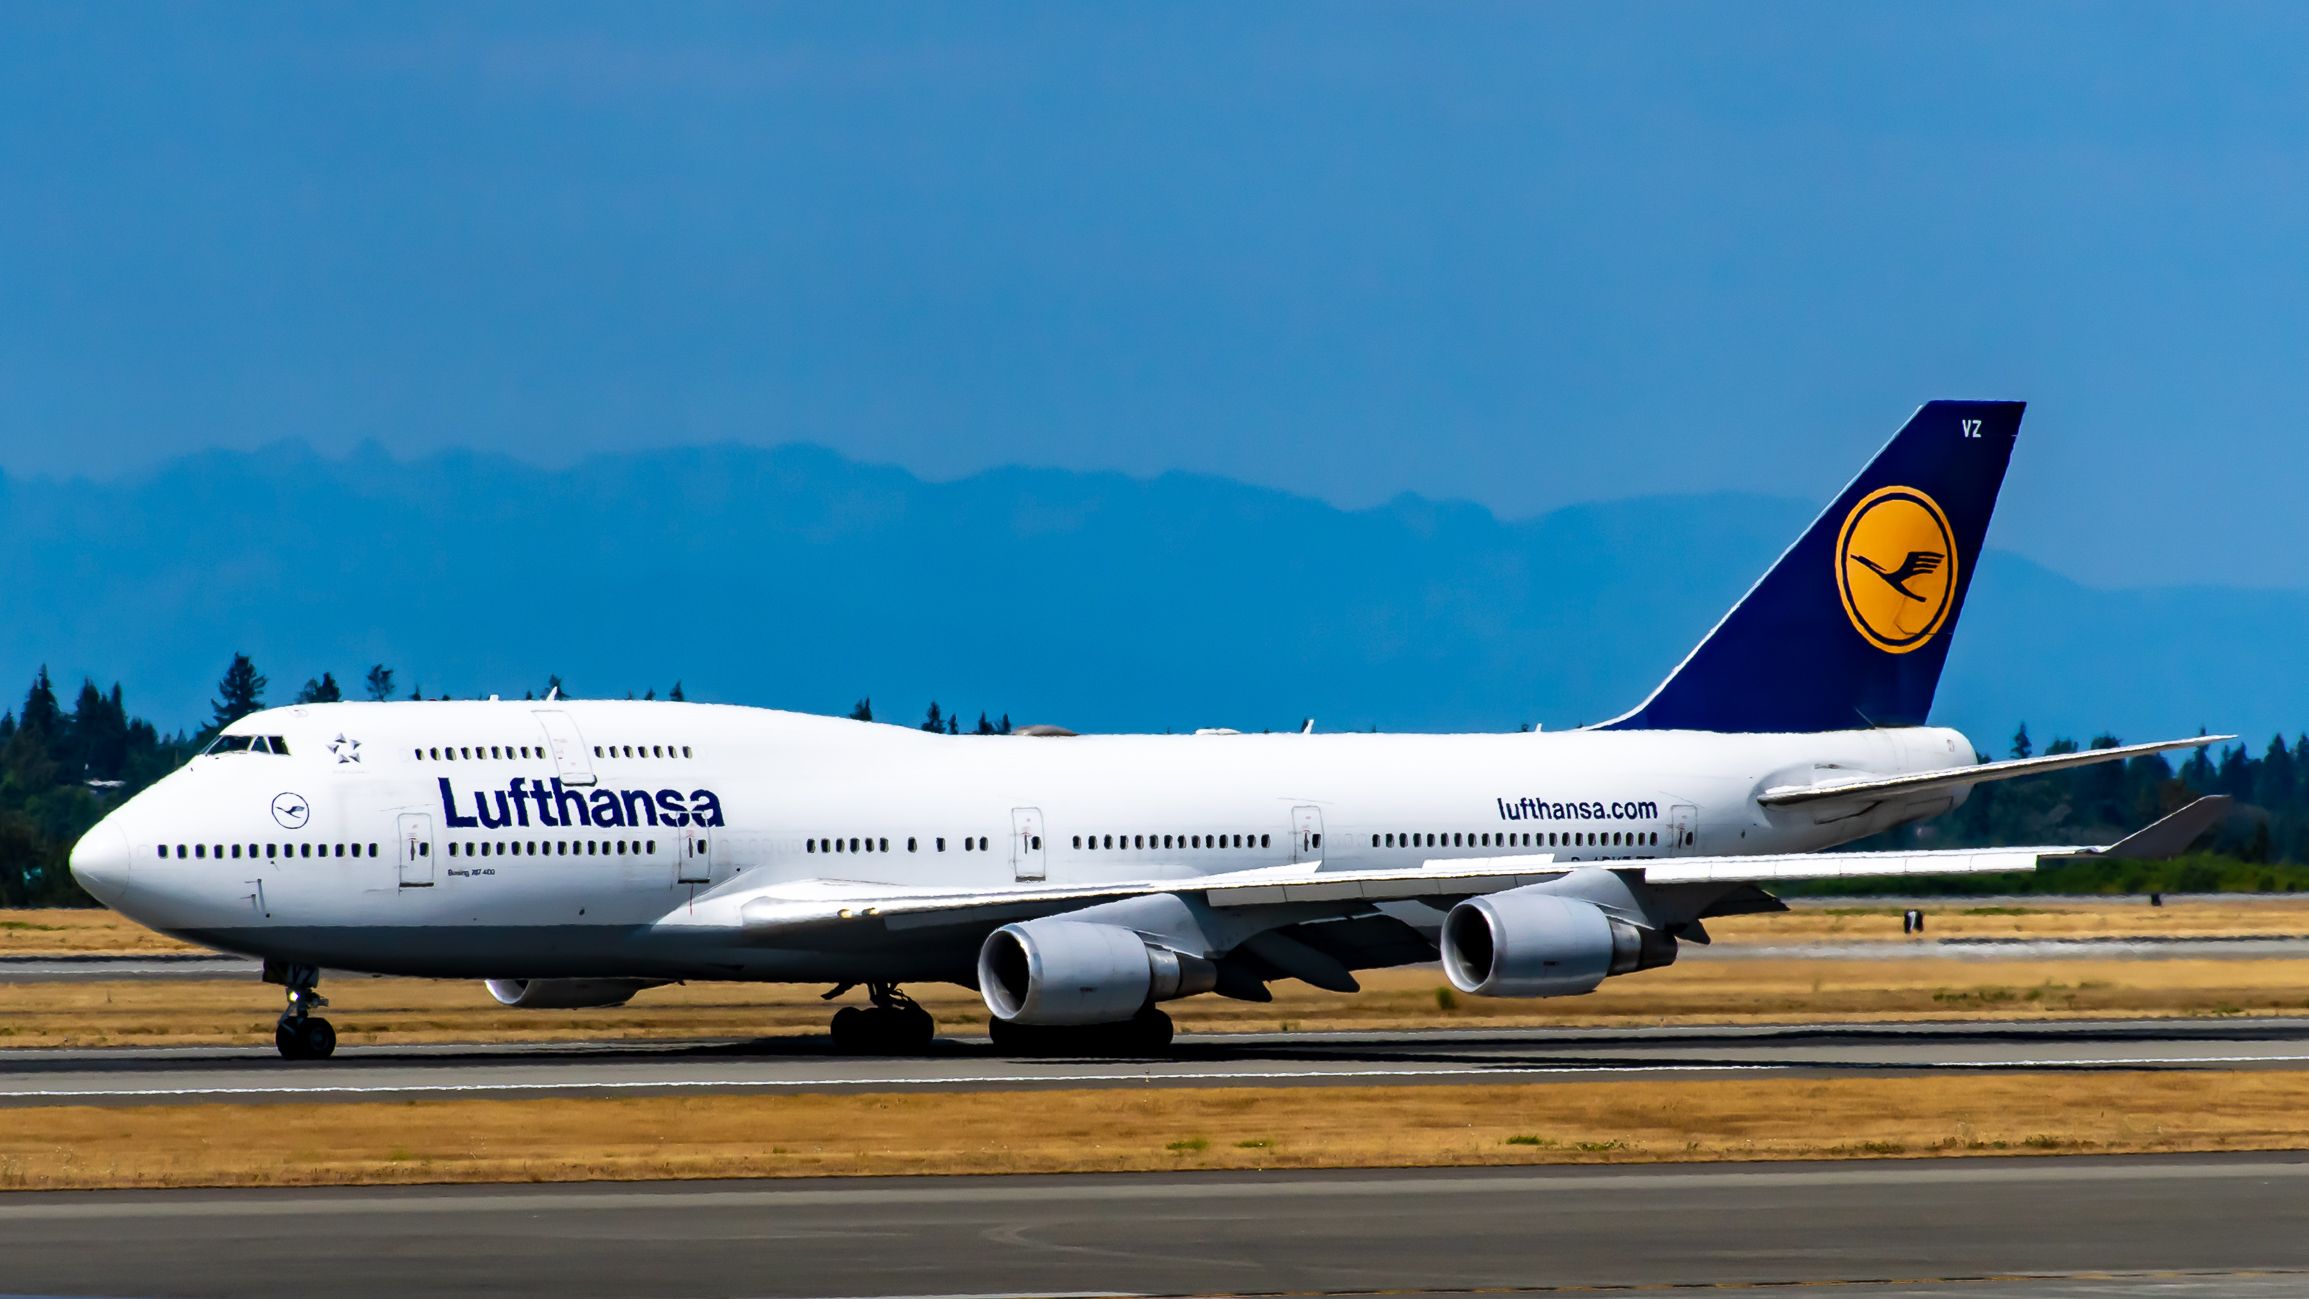 The Lufthansa 747-400 Pulls In